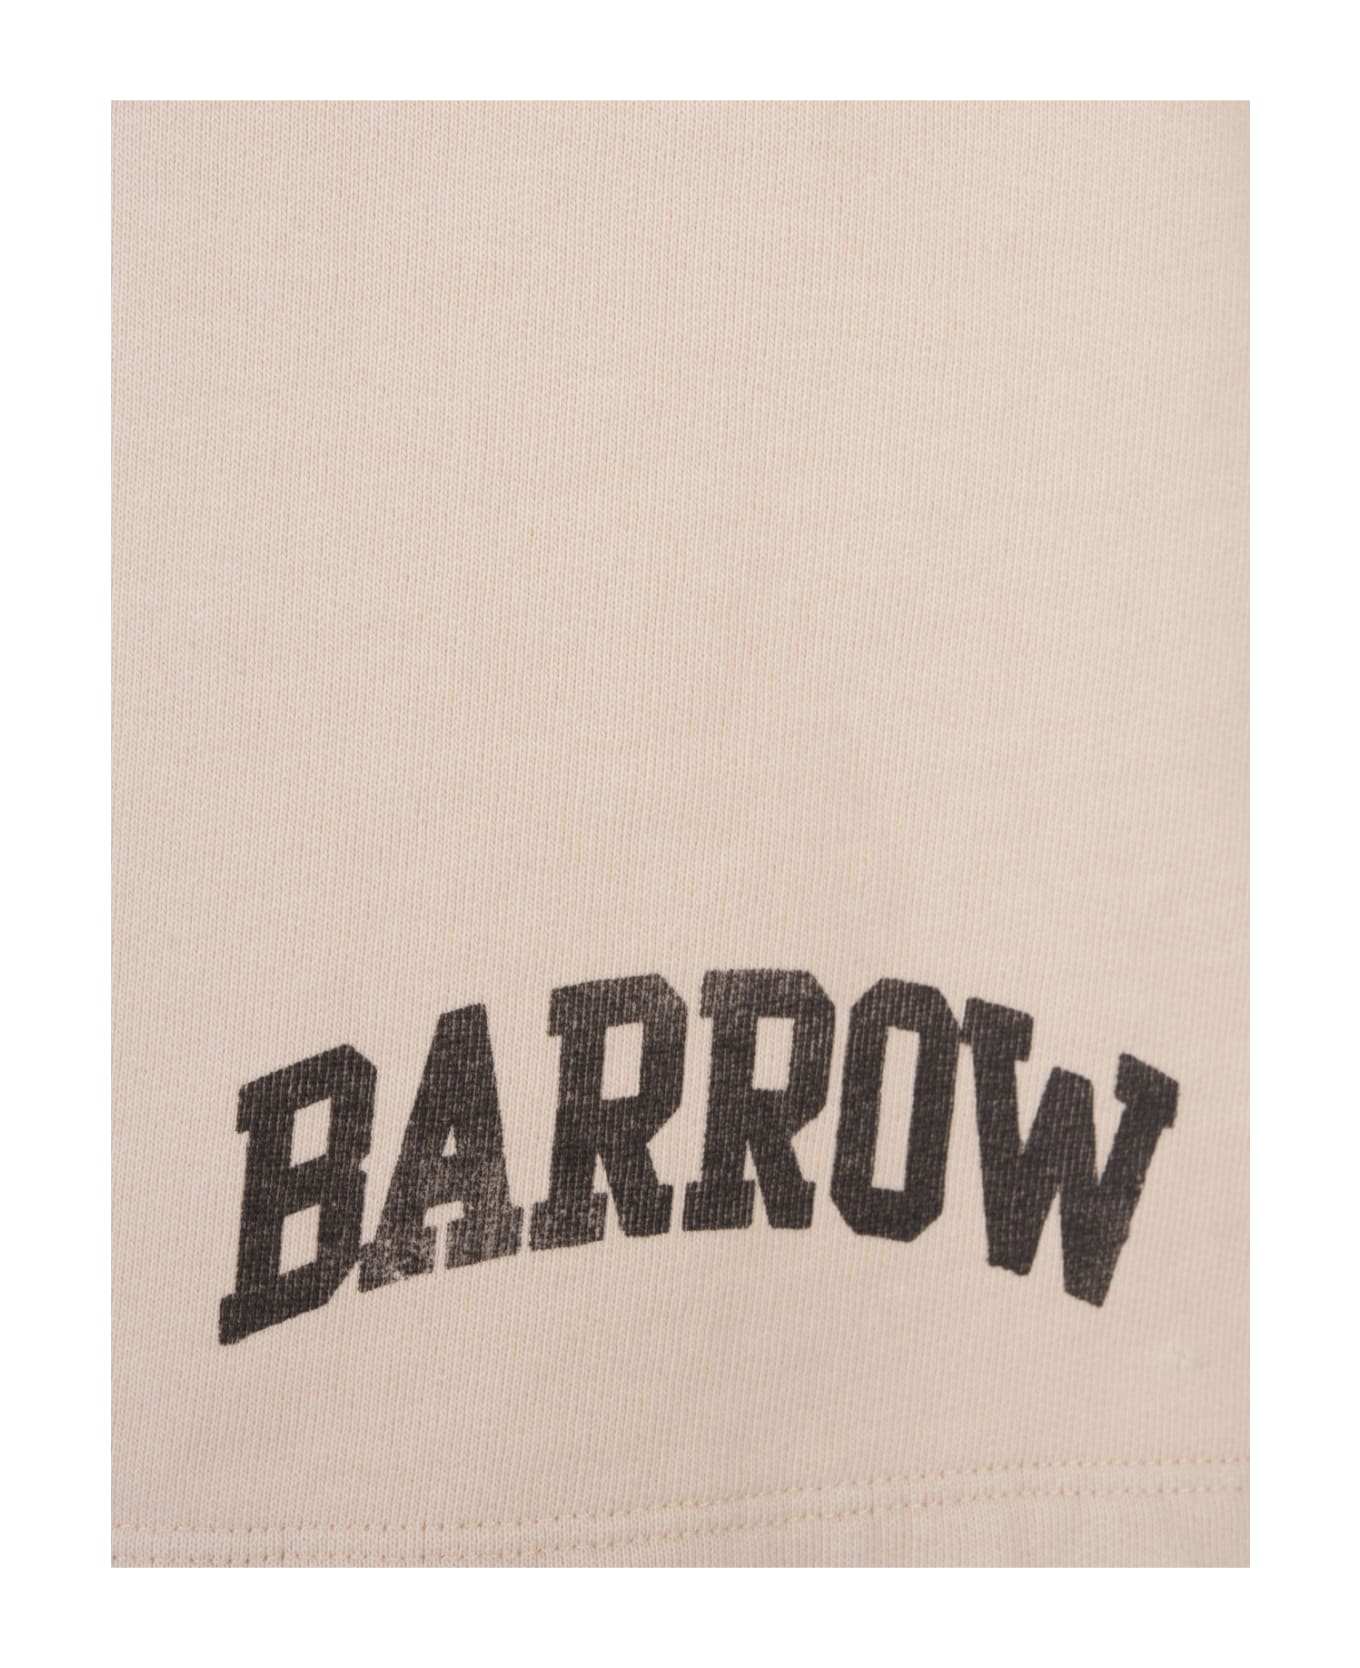 Barrow Tortora Sports Bermuda Shorts With Logo - Brown ショートパンツ